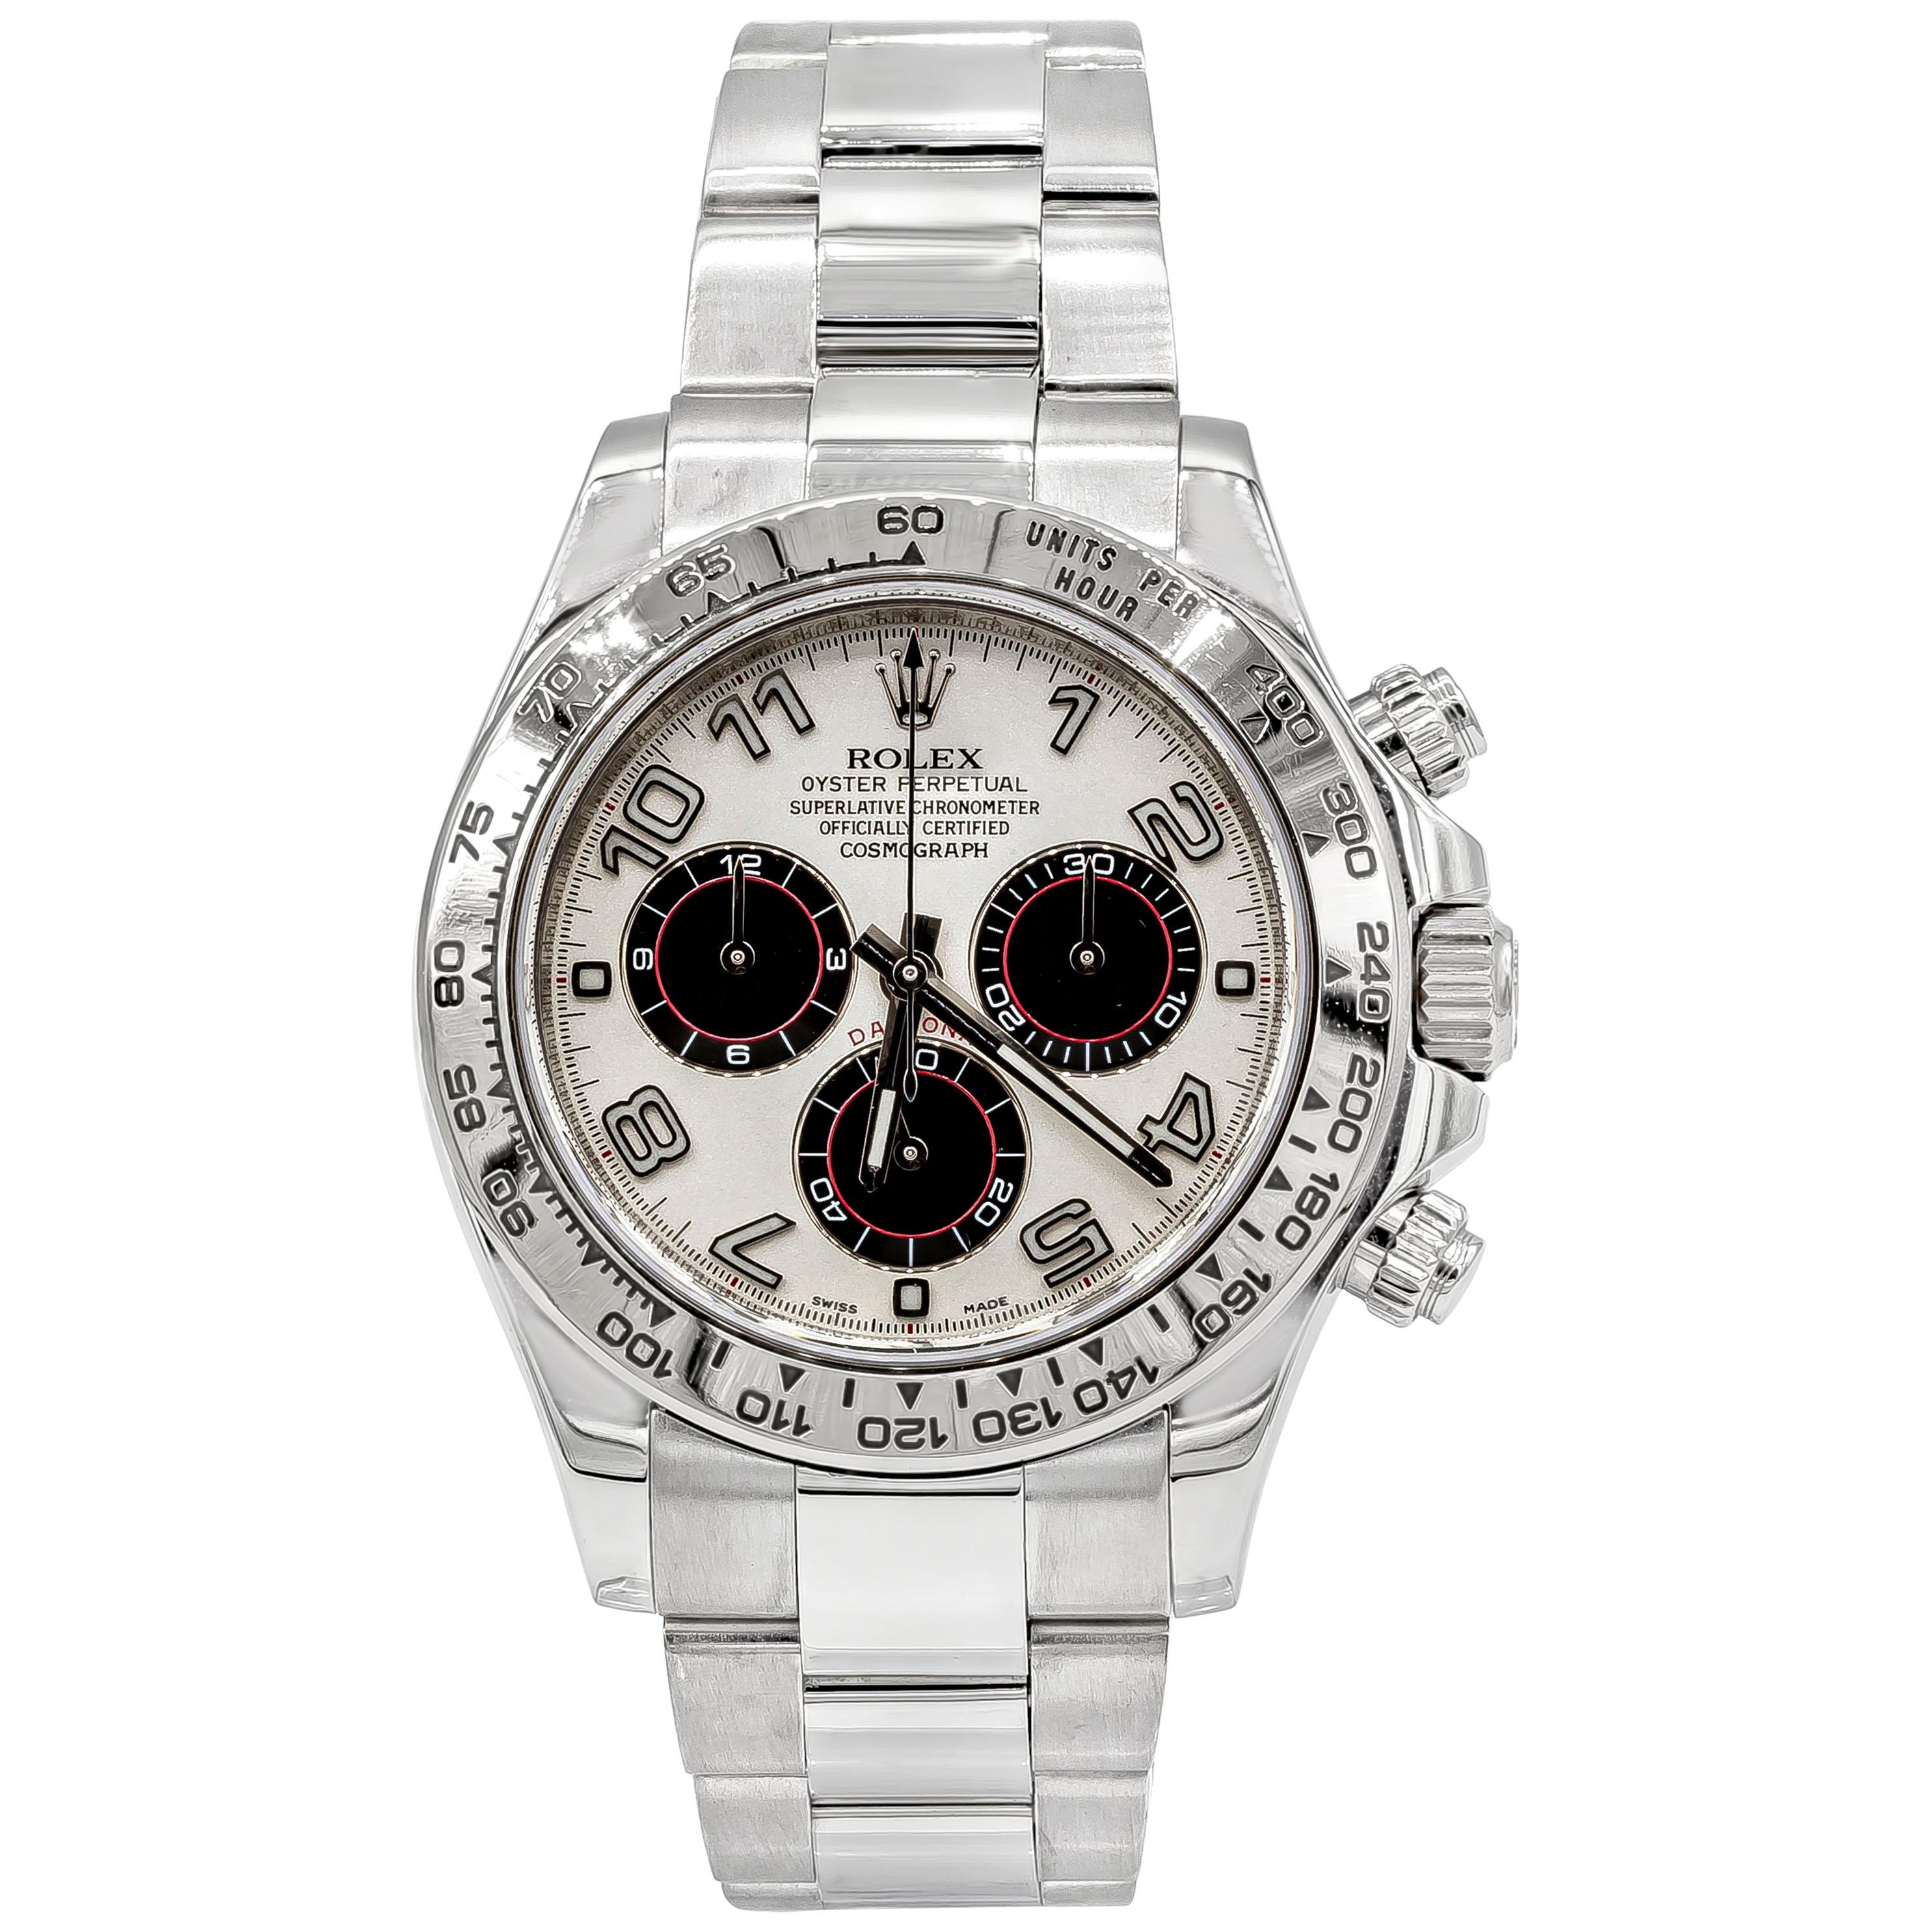 Rolex Daytona Ref 116509 Panda Dial White Gold Chronograph Wristwatch